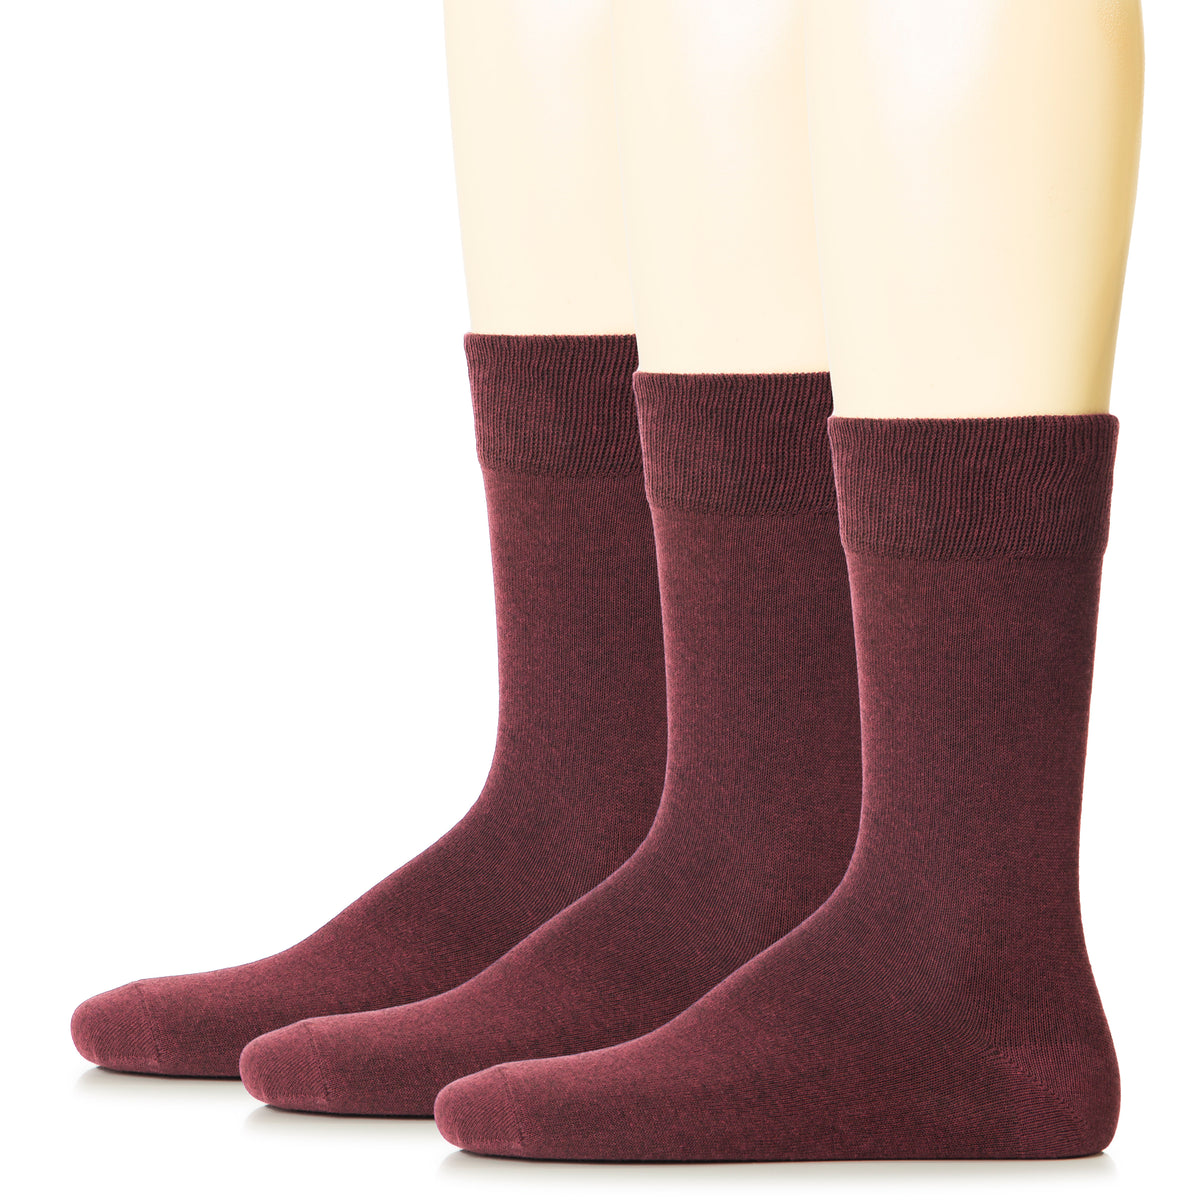 Hugh Ugoli Men Cotton Dress Socks XL / L / M / S Sizes, 3 Pairs | Shoe Size: 8-10 | Burgundy